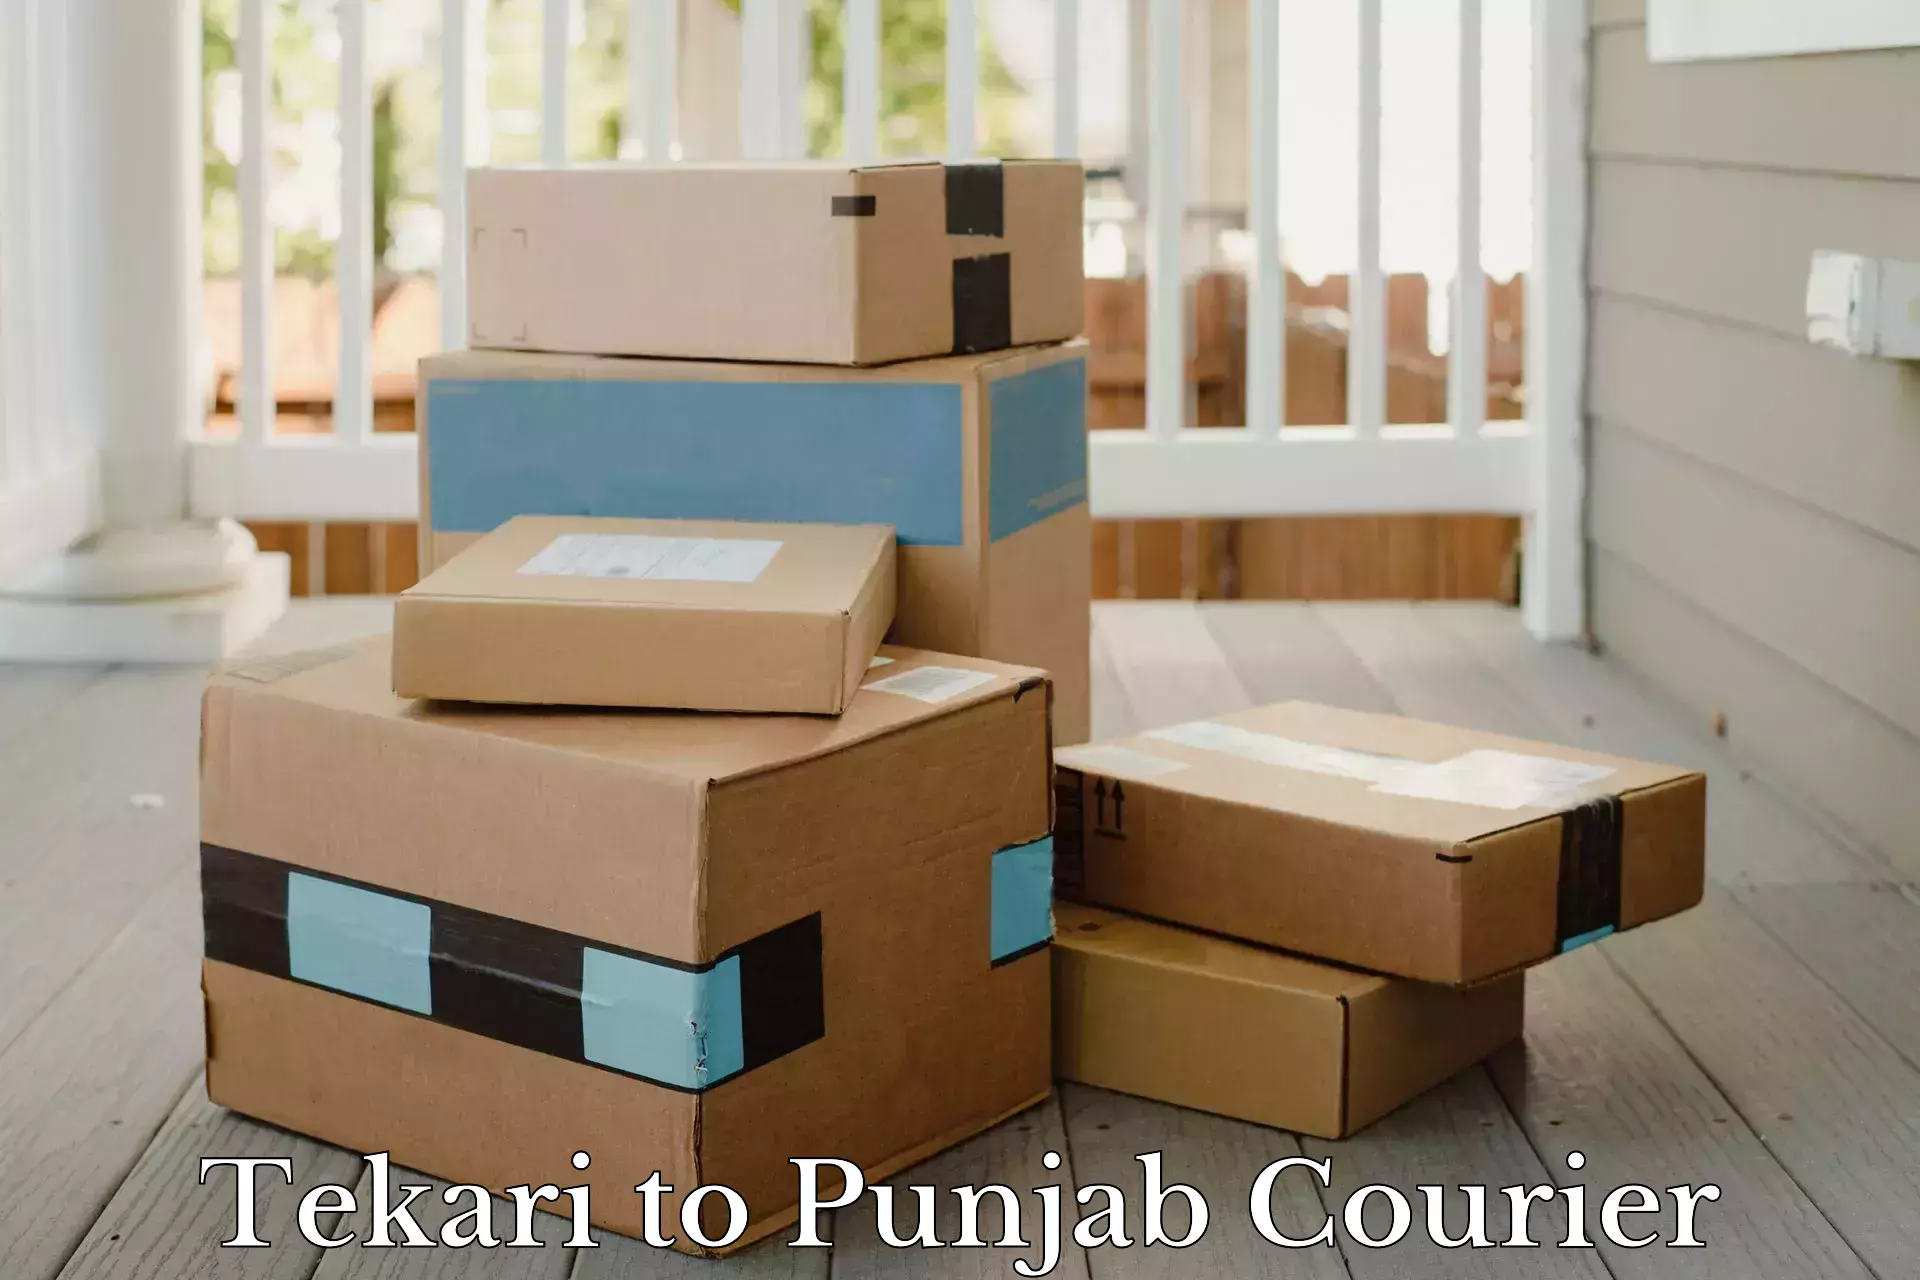 Express logistics providers Tekari to Punjab